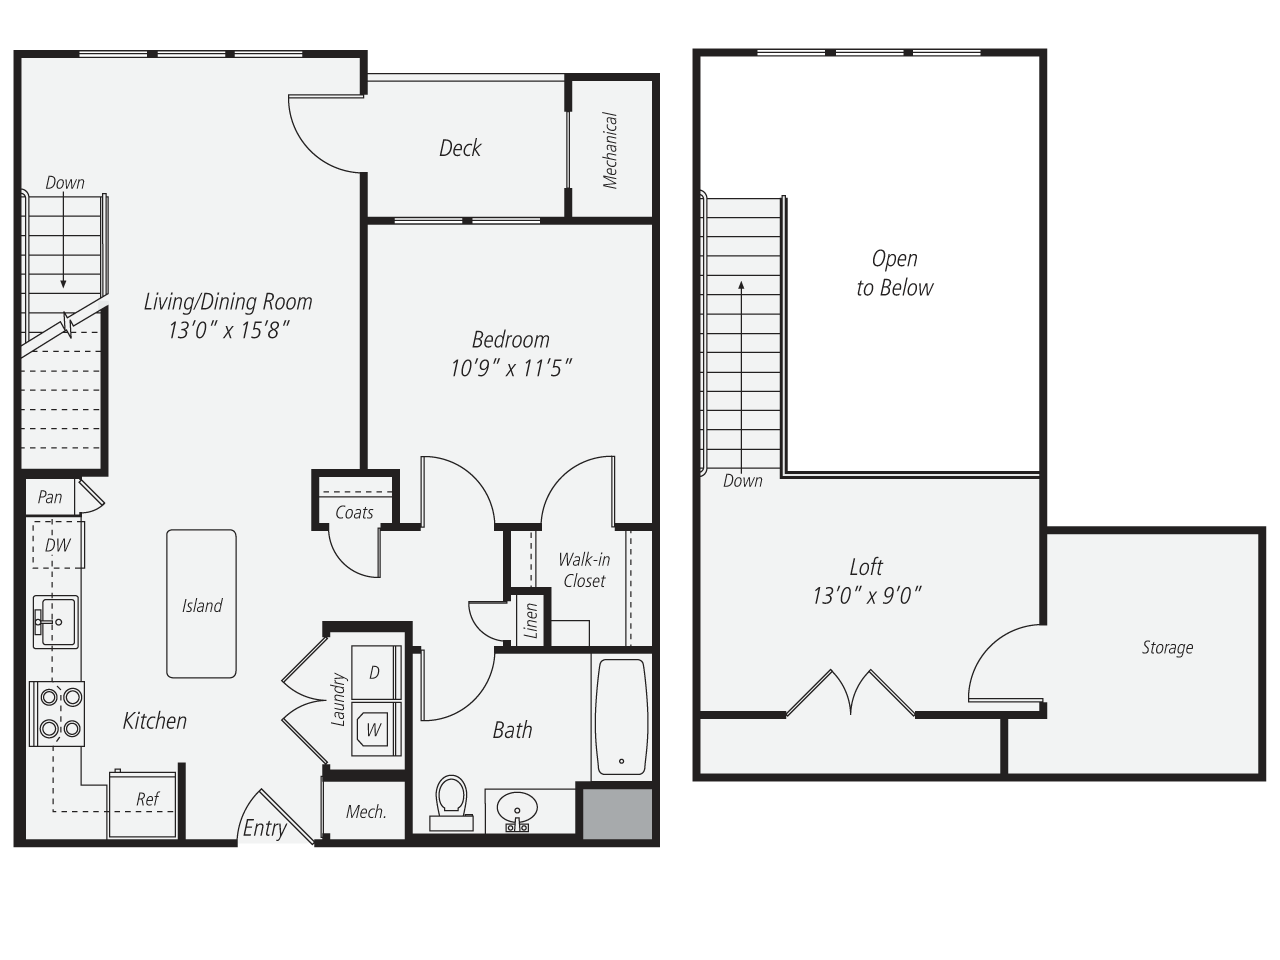 Floorplan for Apartment #457, 1 bedroom unit at Halstead Norwalk